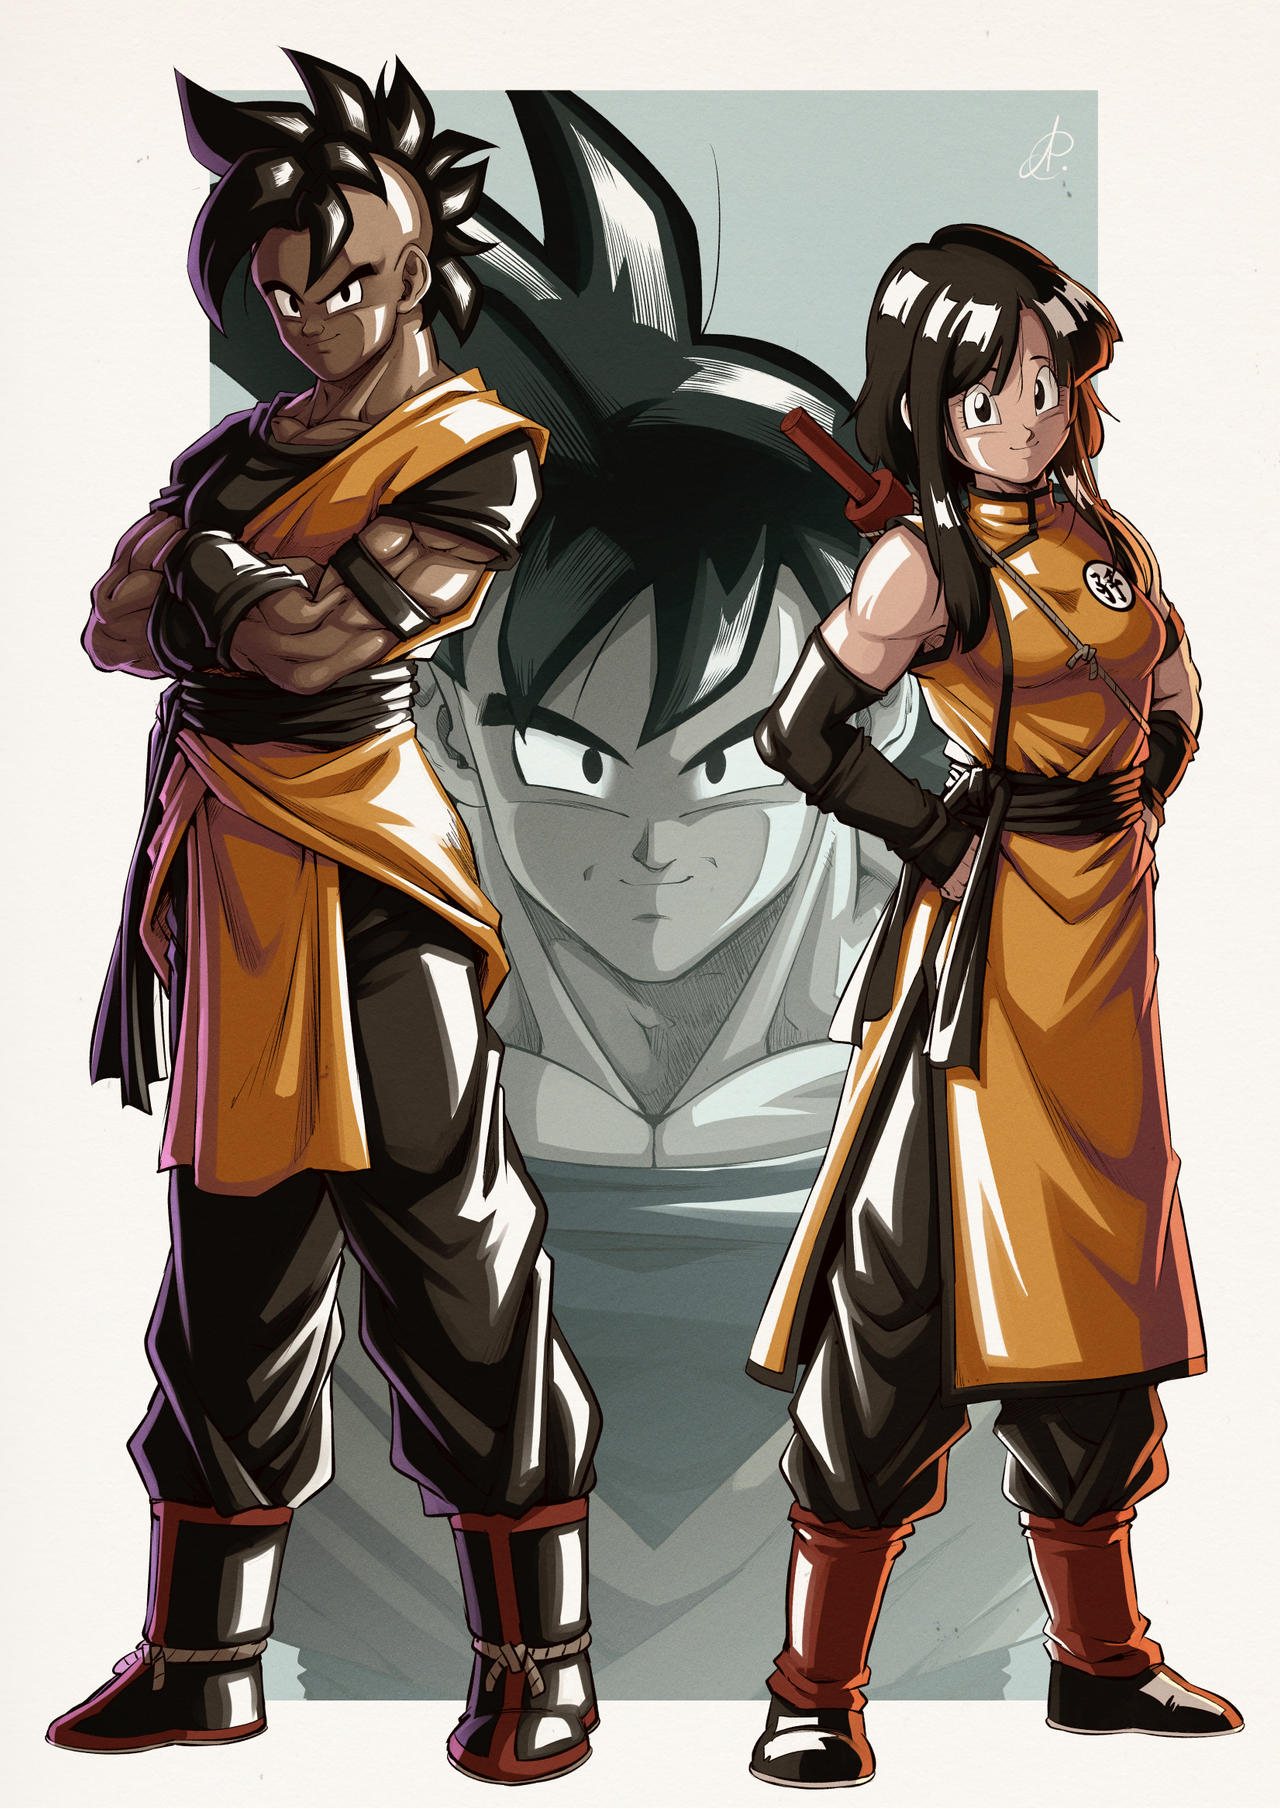 Goku Vs Vegeta by Asura-00 on DeviantArt